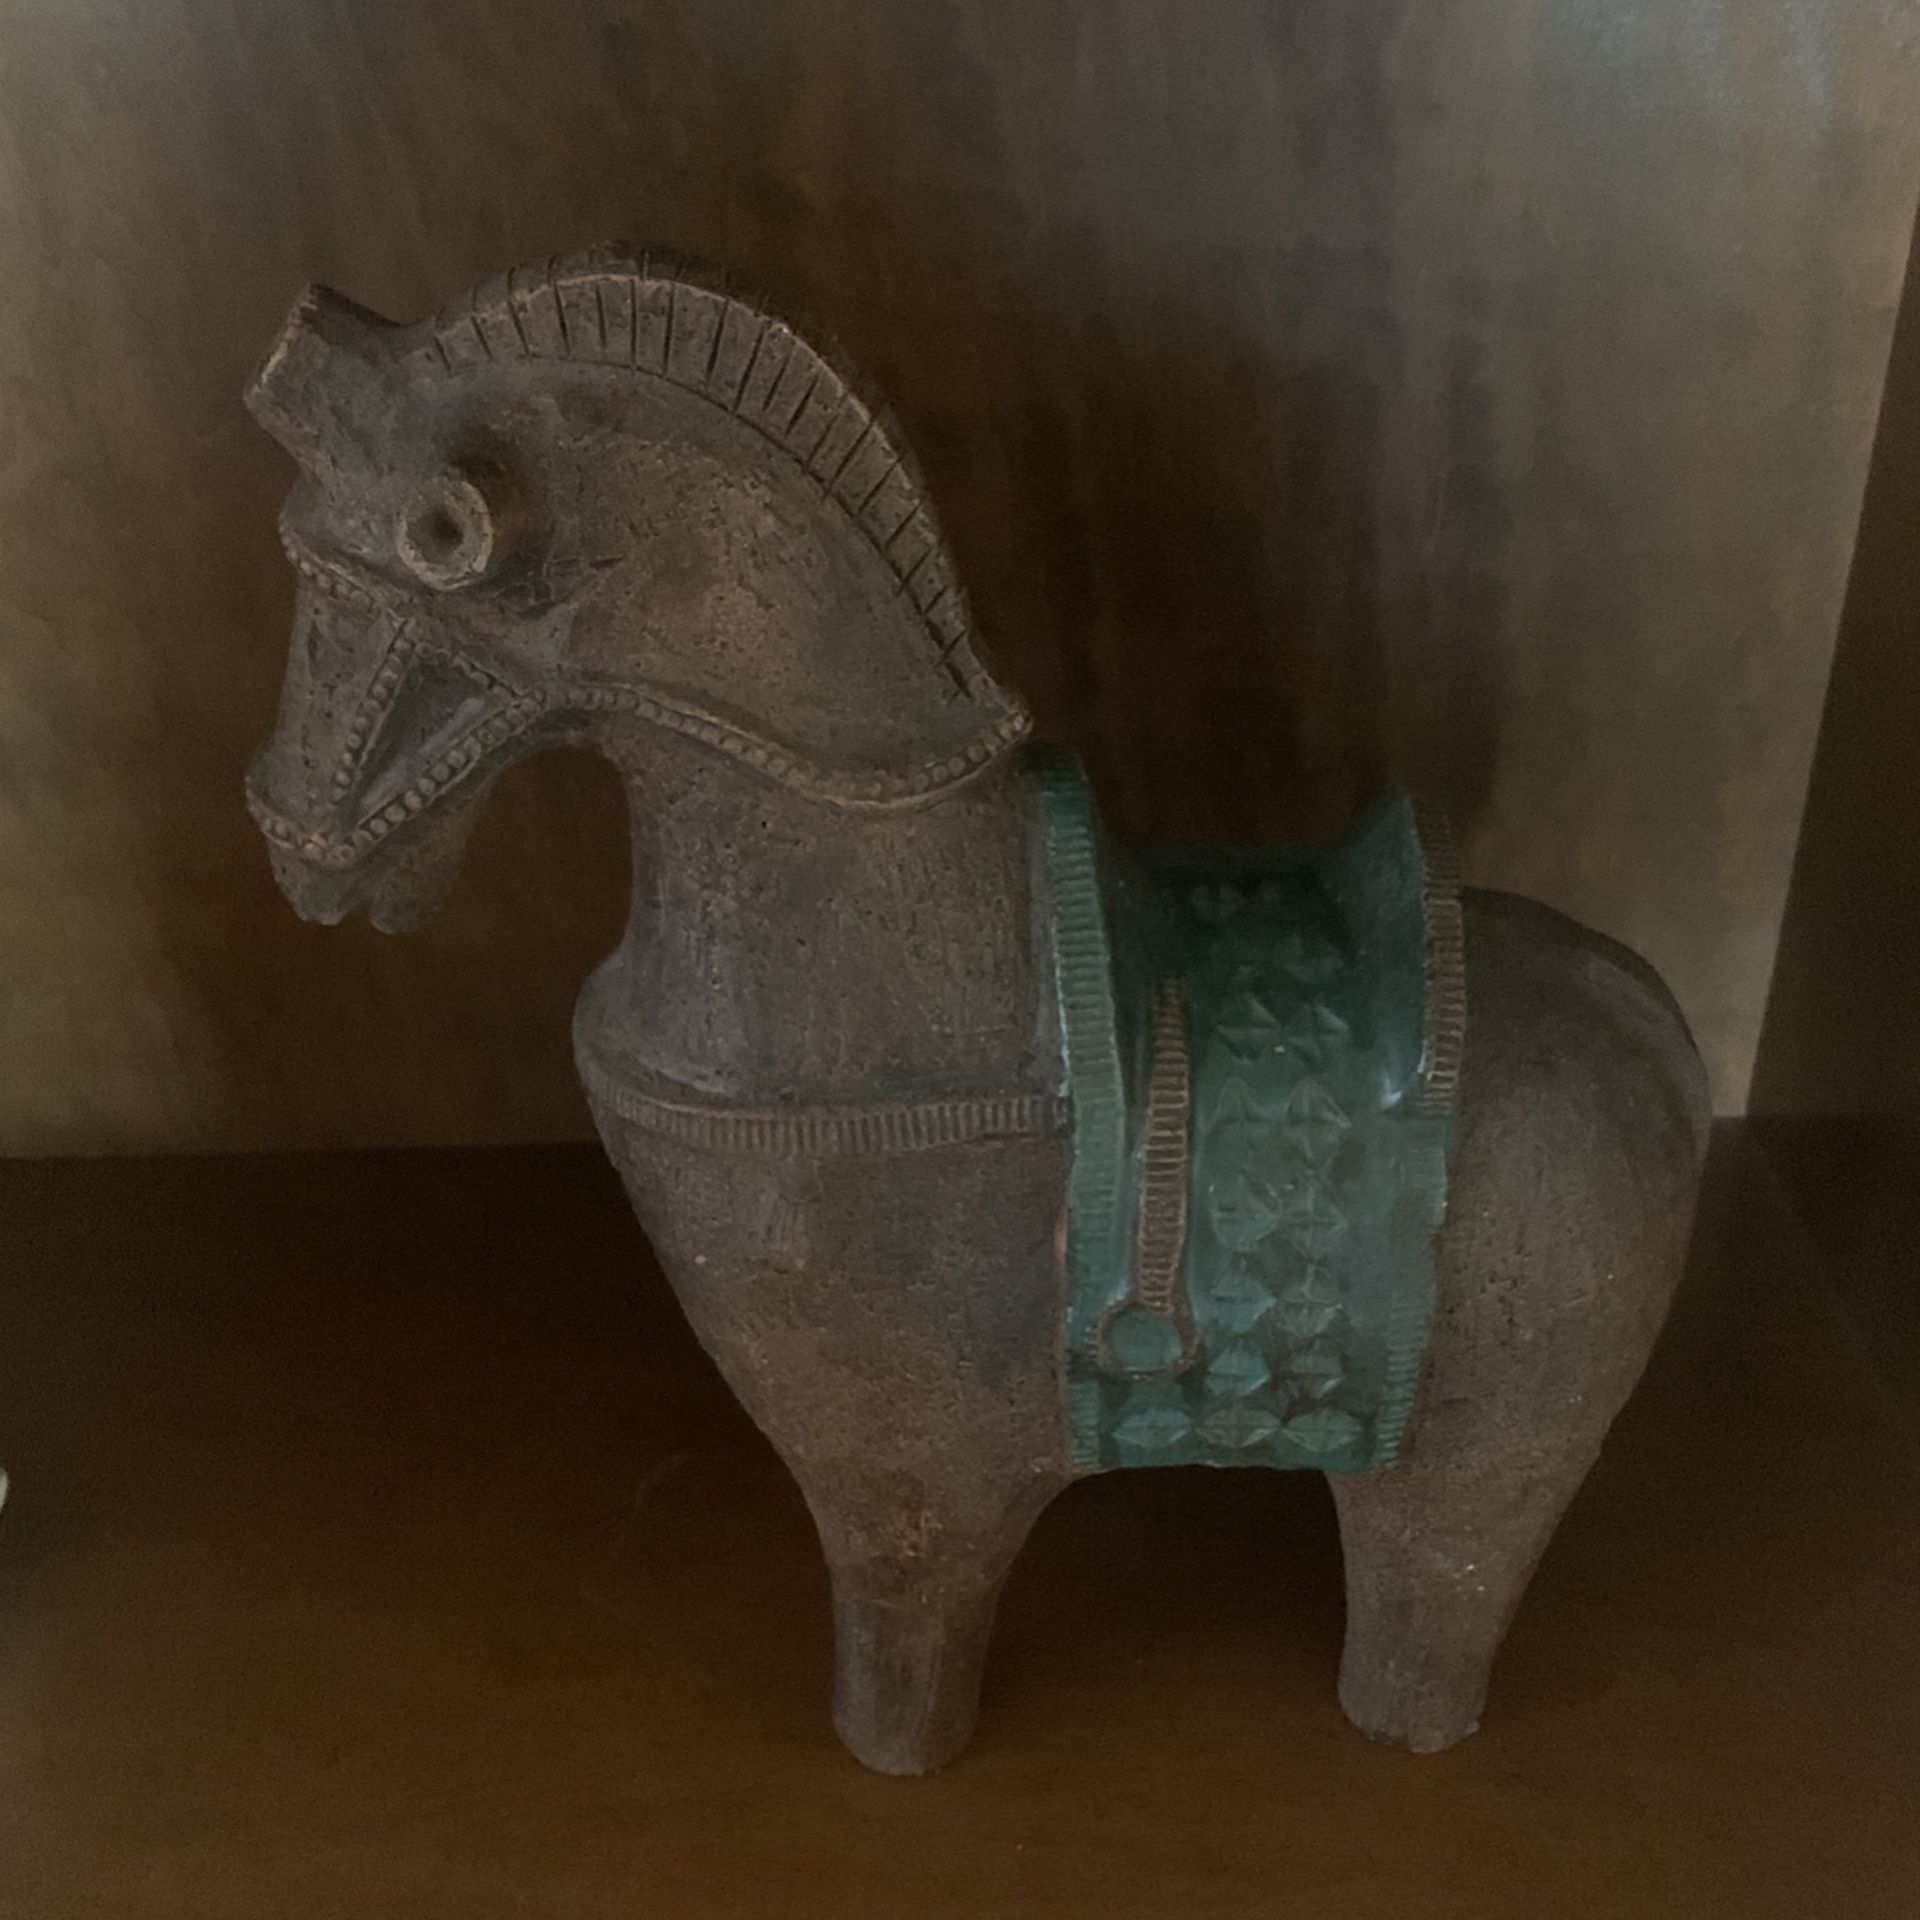 Decorative Horse